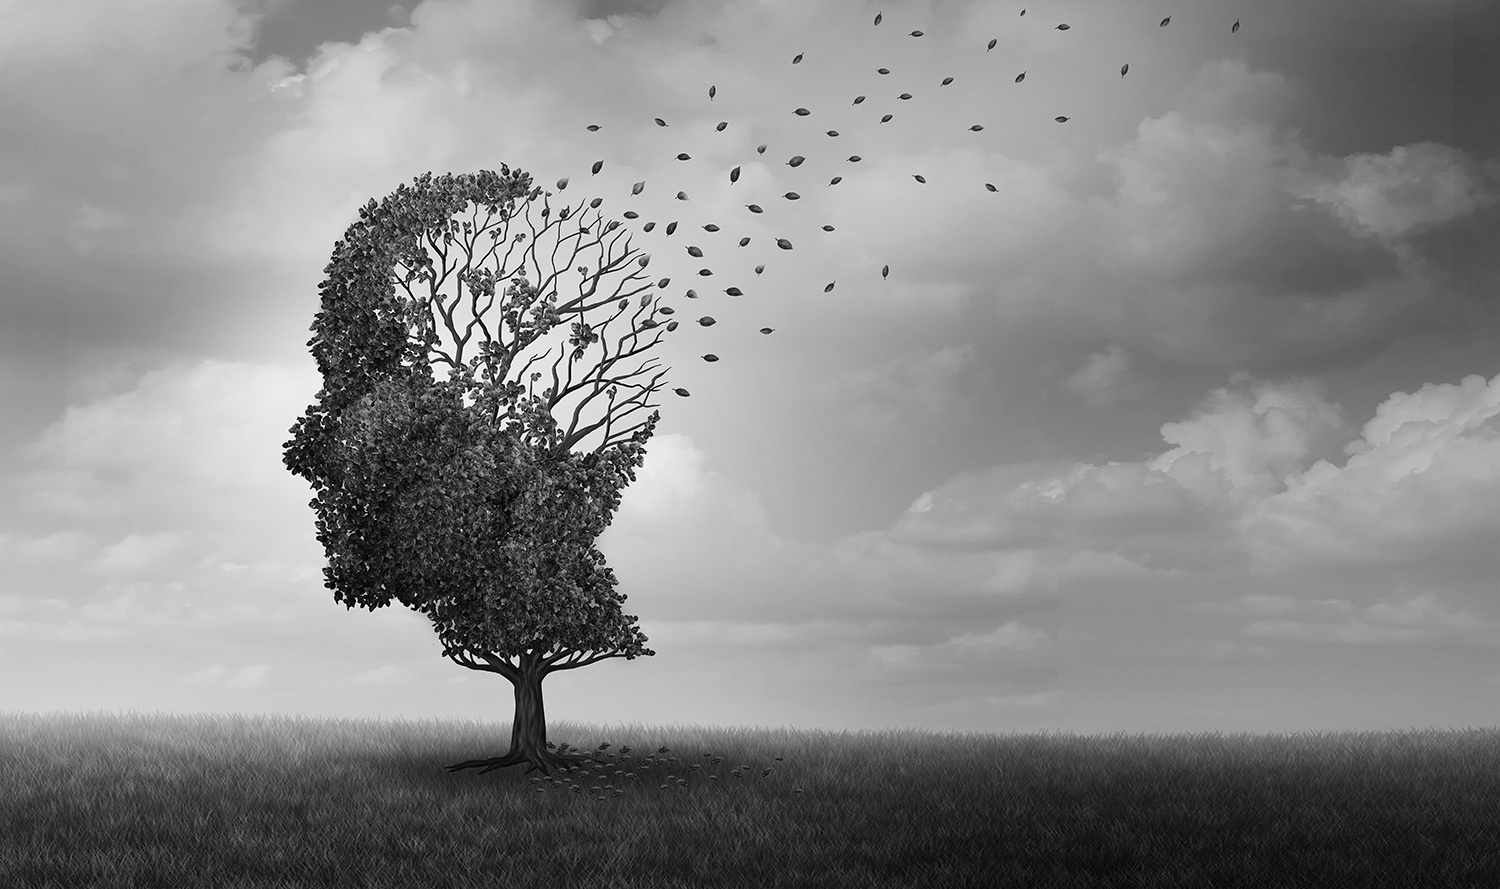 Alzheimer disease as a neuropathology memory loss due to brain degeneration and decline as a surreal medical neurology illness concept.